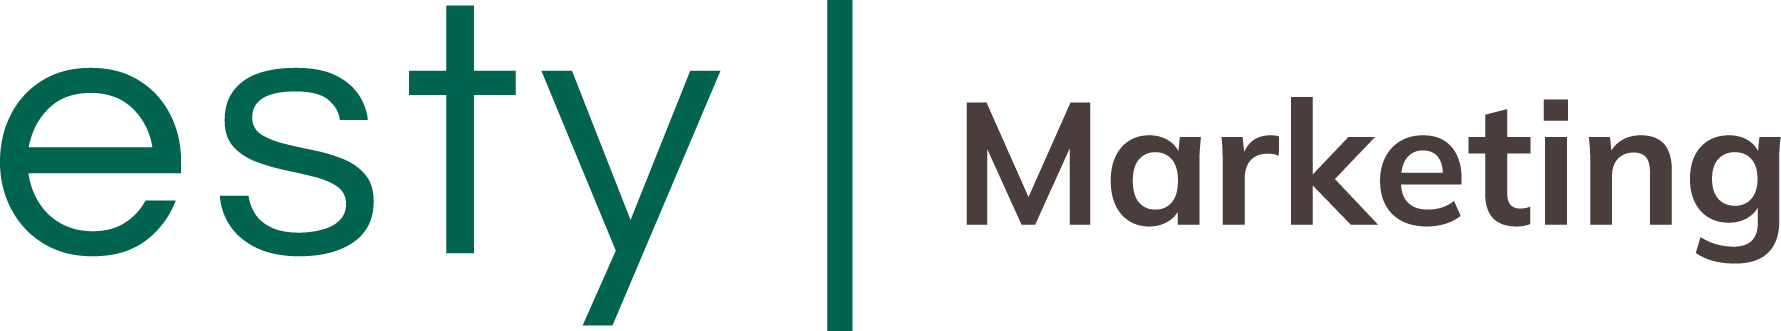 Logo - ESTY Marketing